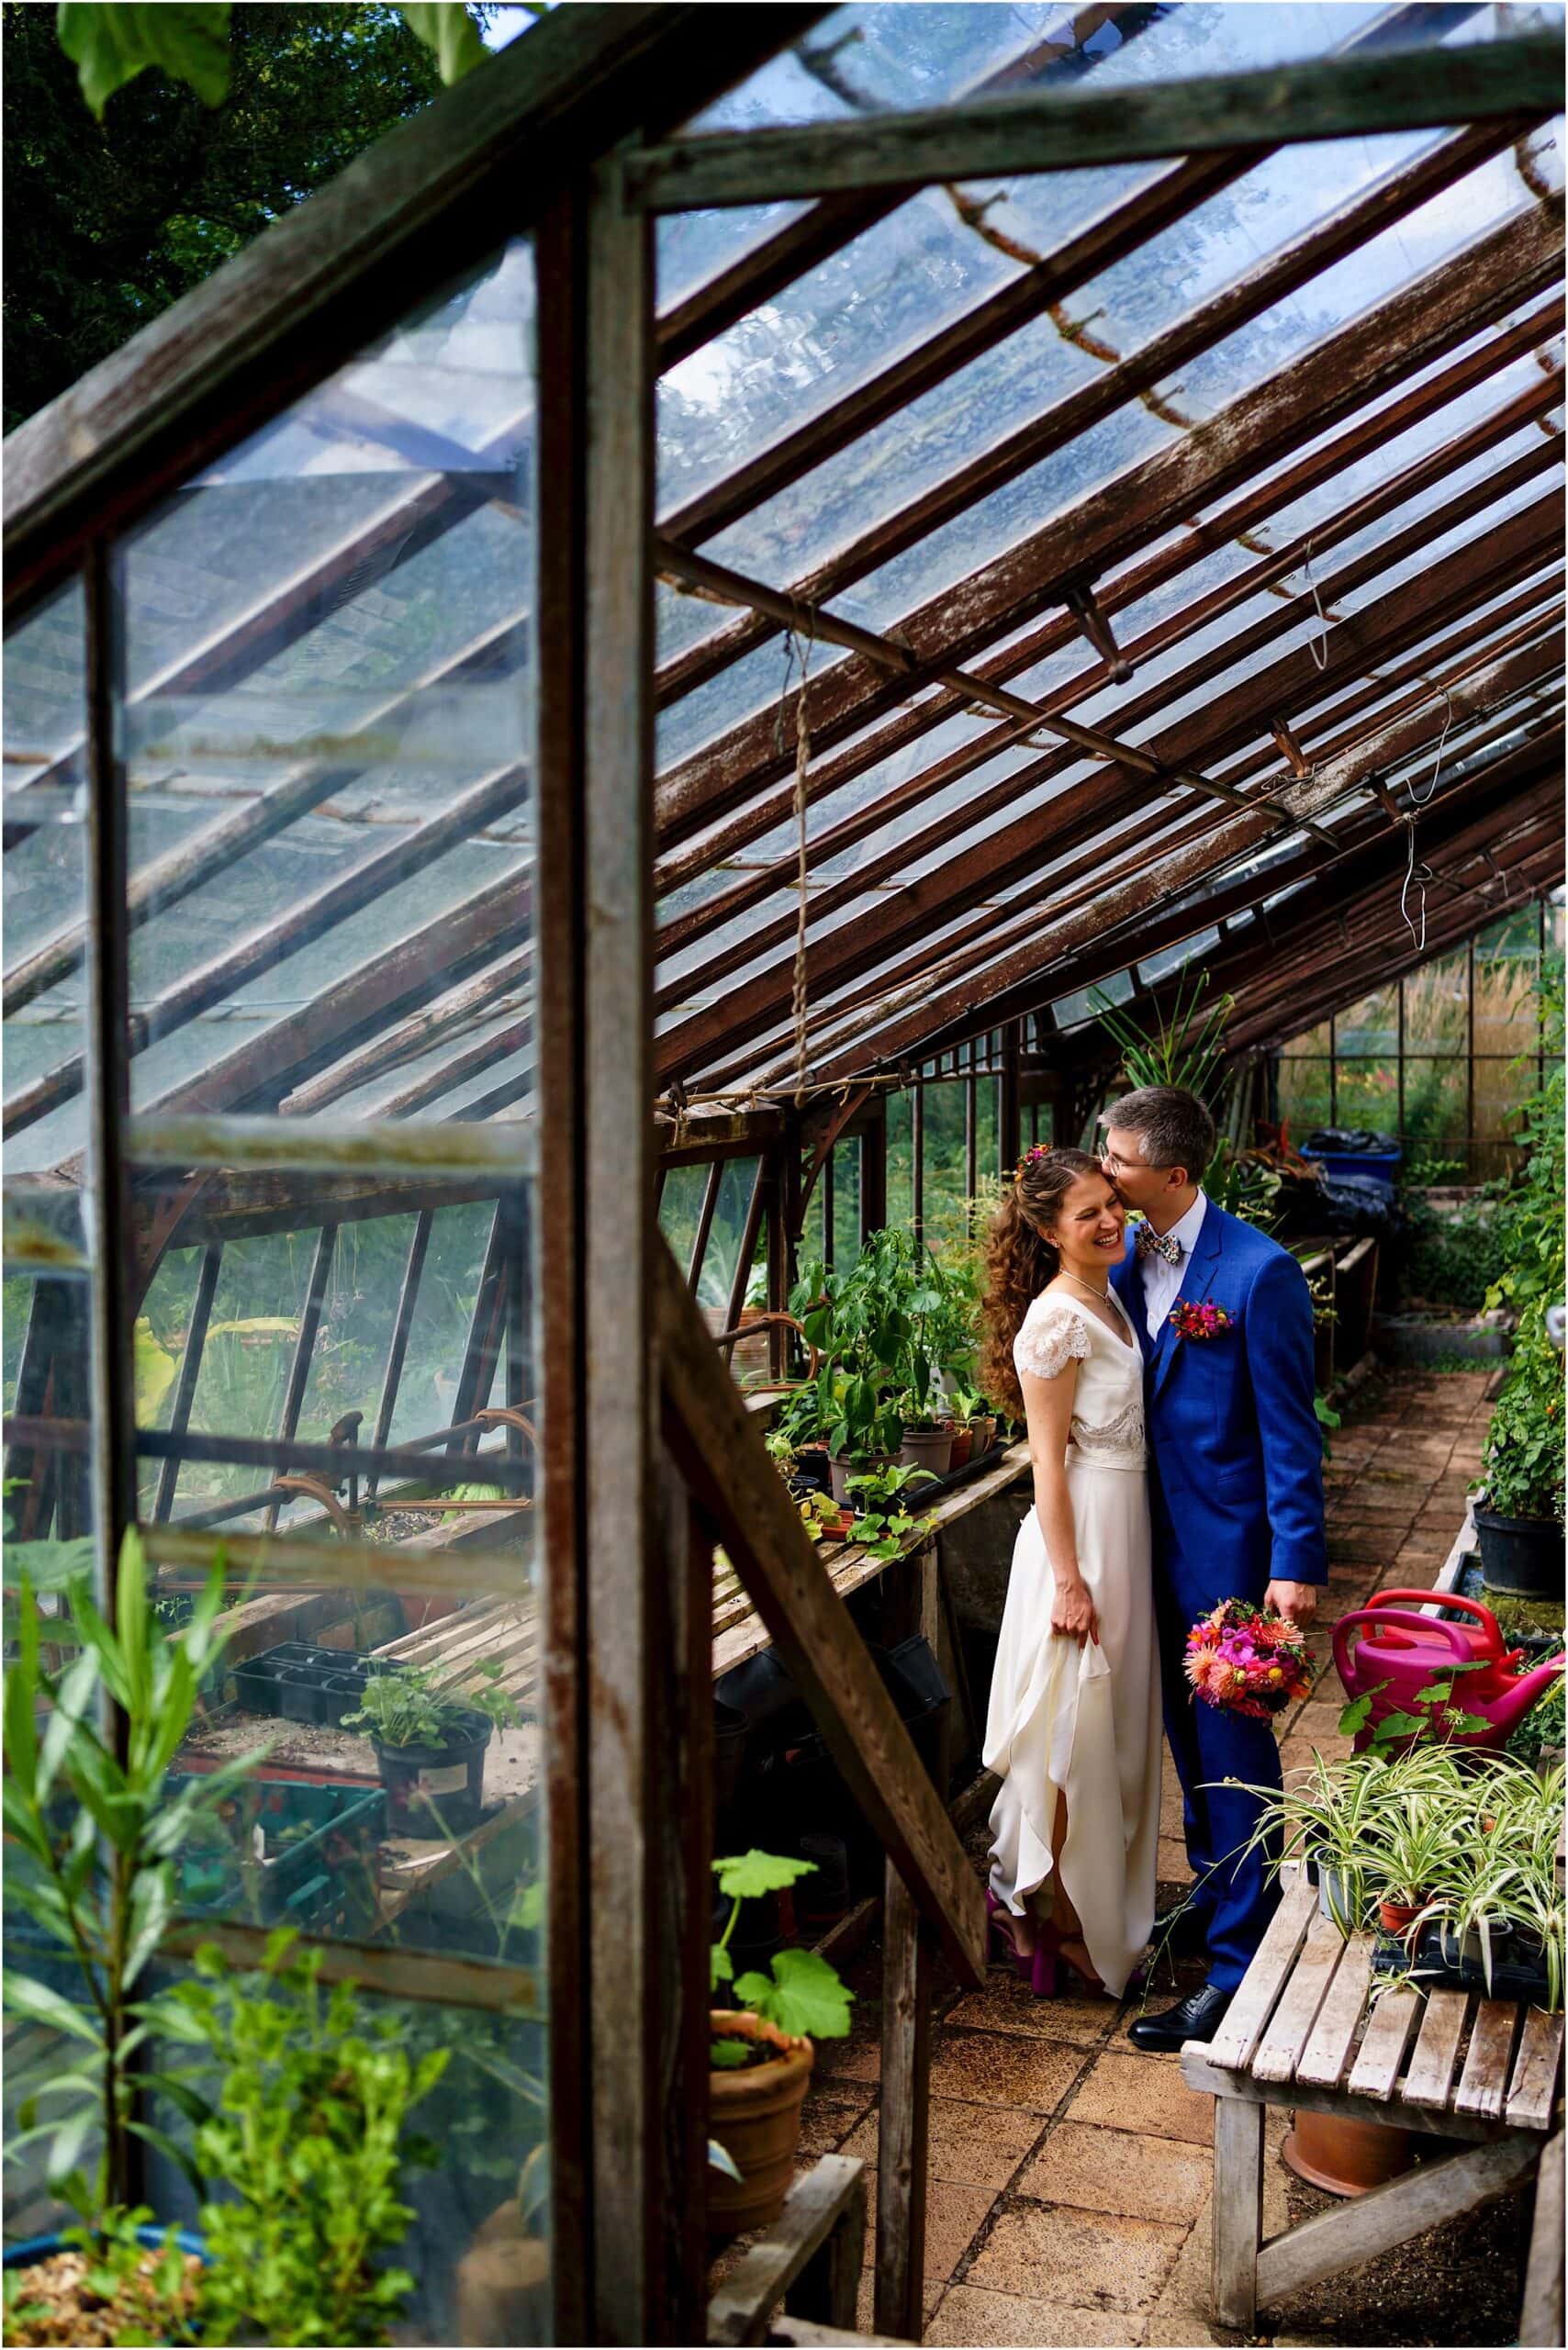 Wedding couple in greenhouse